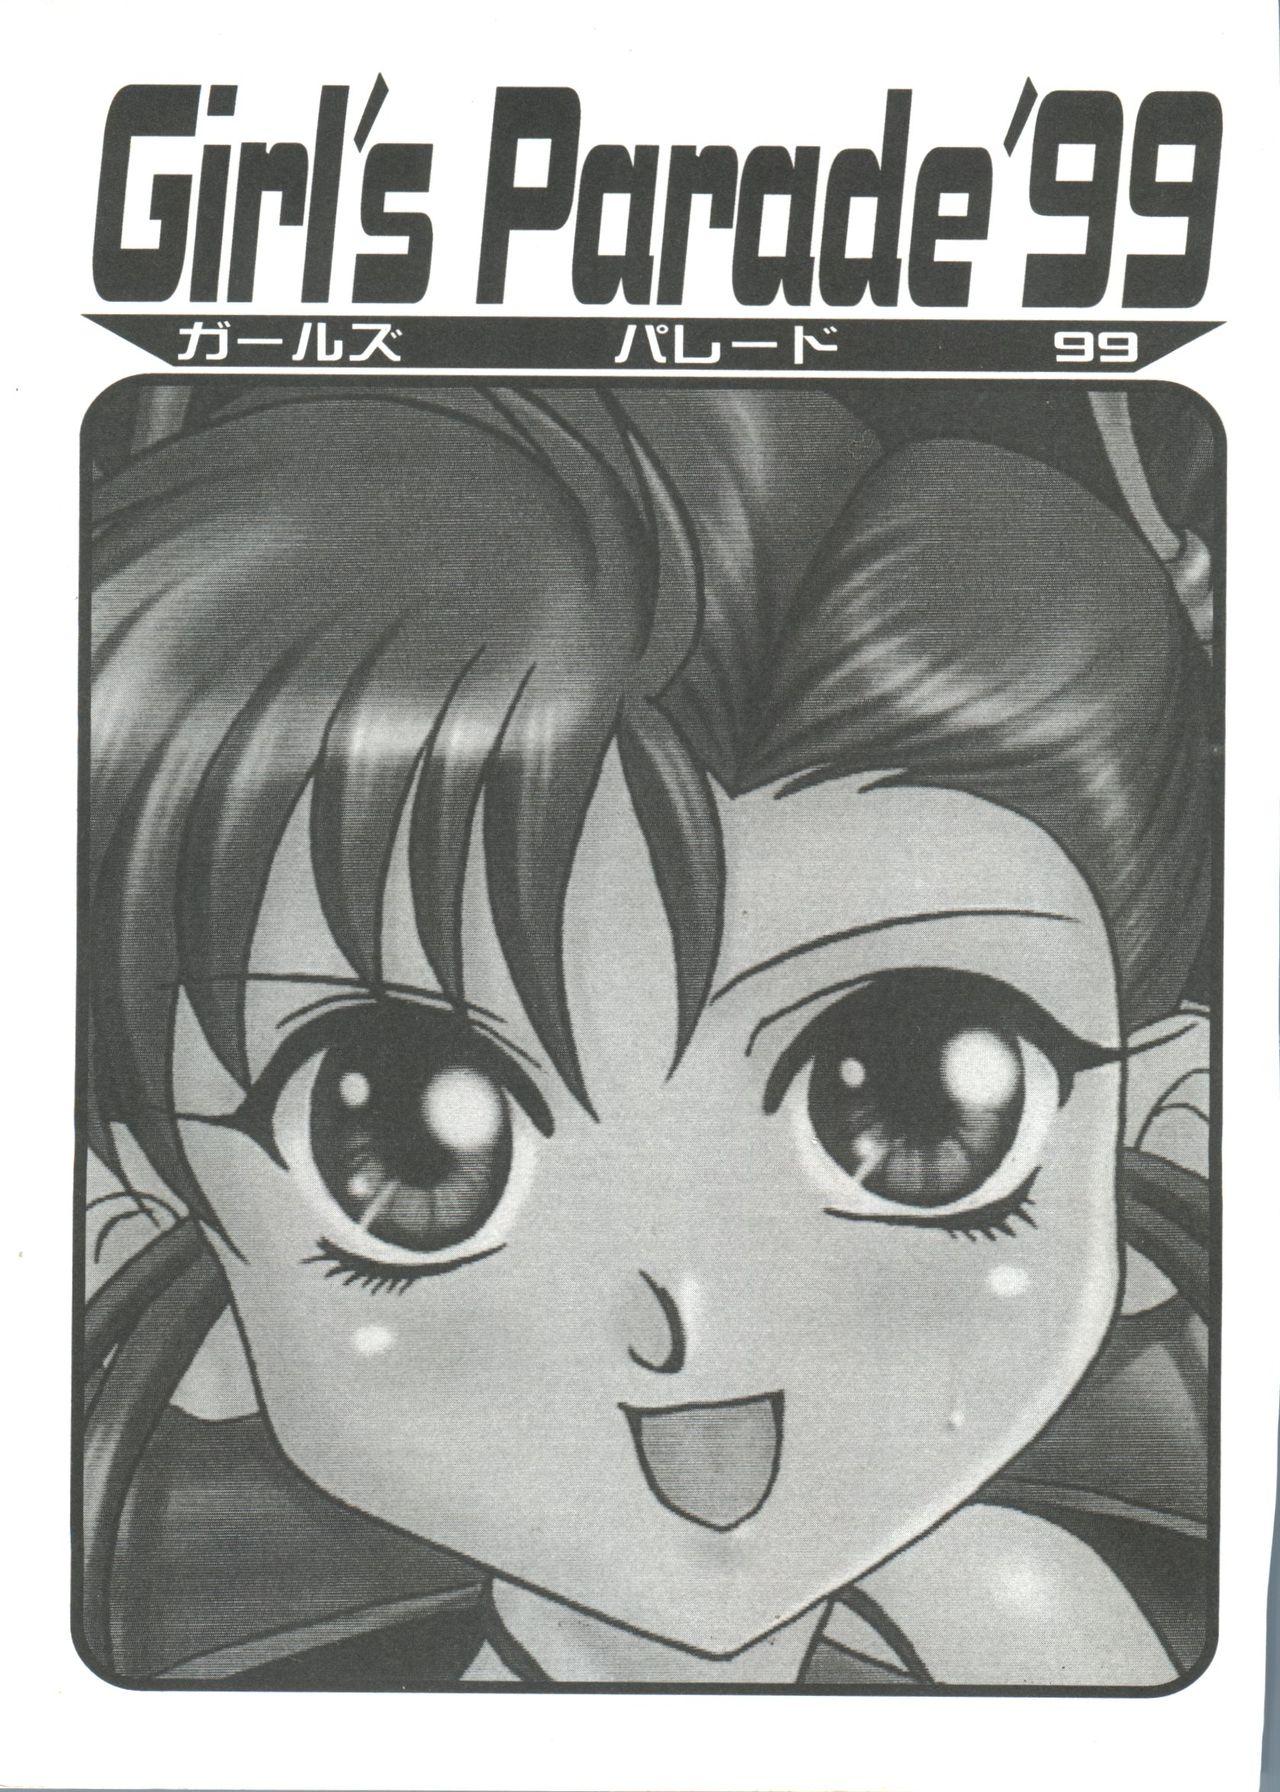 Enema Girl's Parade 99 Cut 10 - Ah my goddess Tenchi muyo Bakusou kyoudai lets and go Fun fun pharmacy Blow Job - Page 3